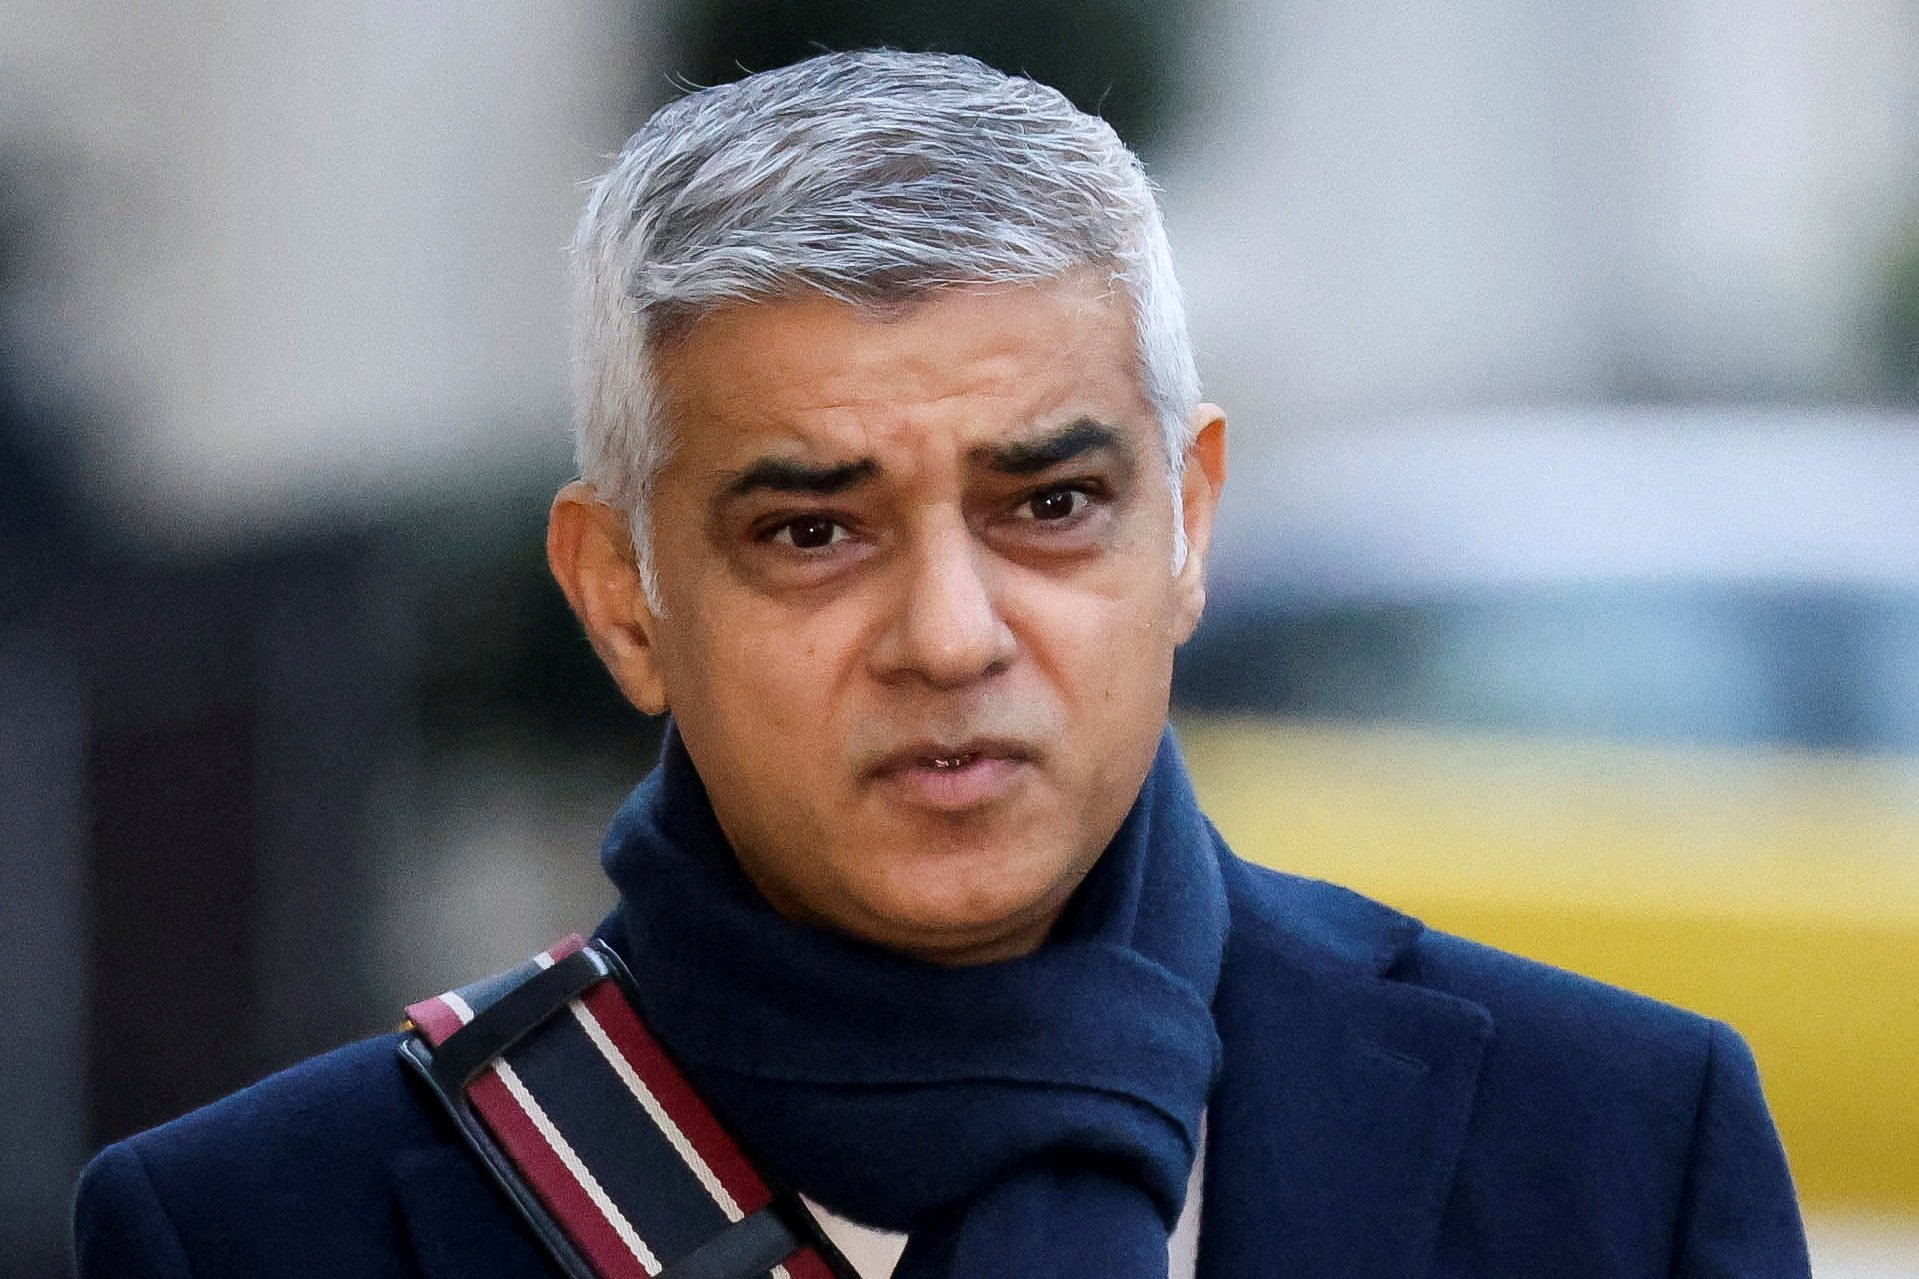 London Mayor Sadiq Khan. File photo: Reuters